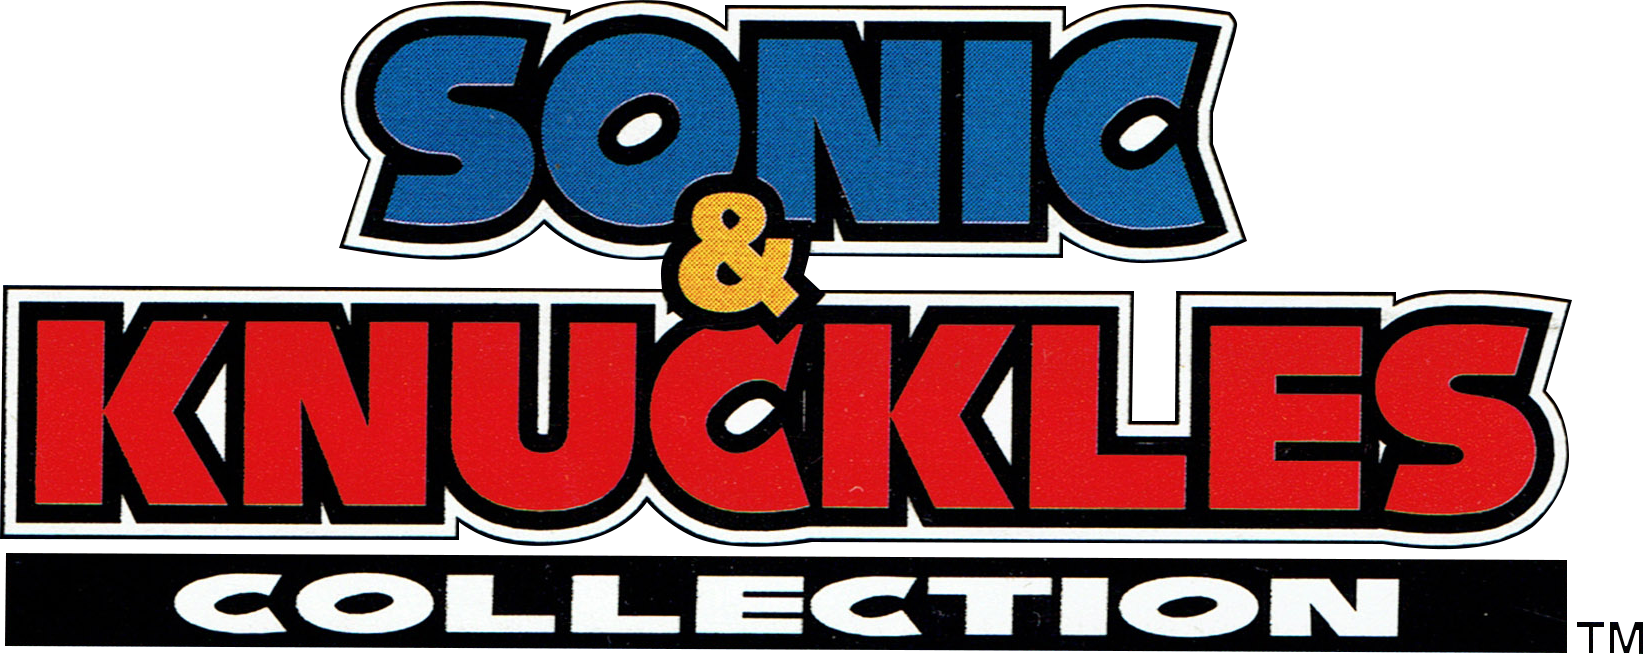 Sonic and knuckles download. Надпись Knuckle. Sonic and Knuckles logo. Sonic & Knuckles collection. Логотип НАКЛЗА.